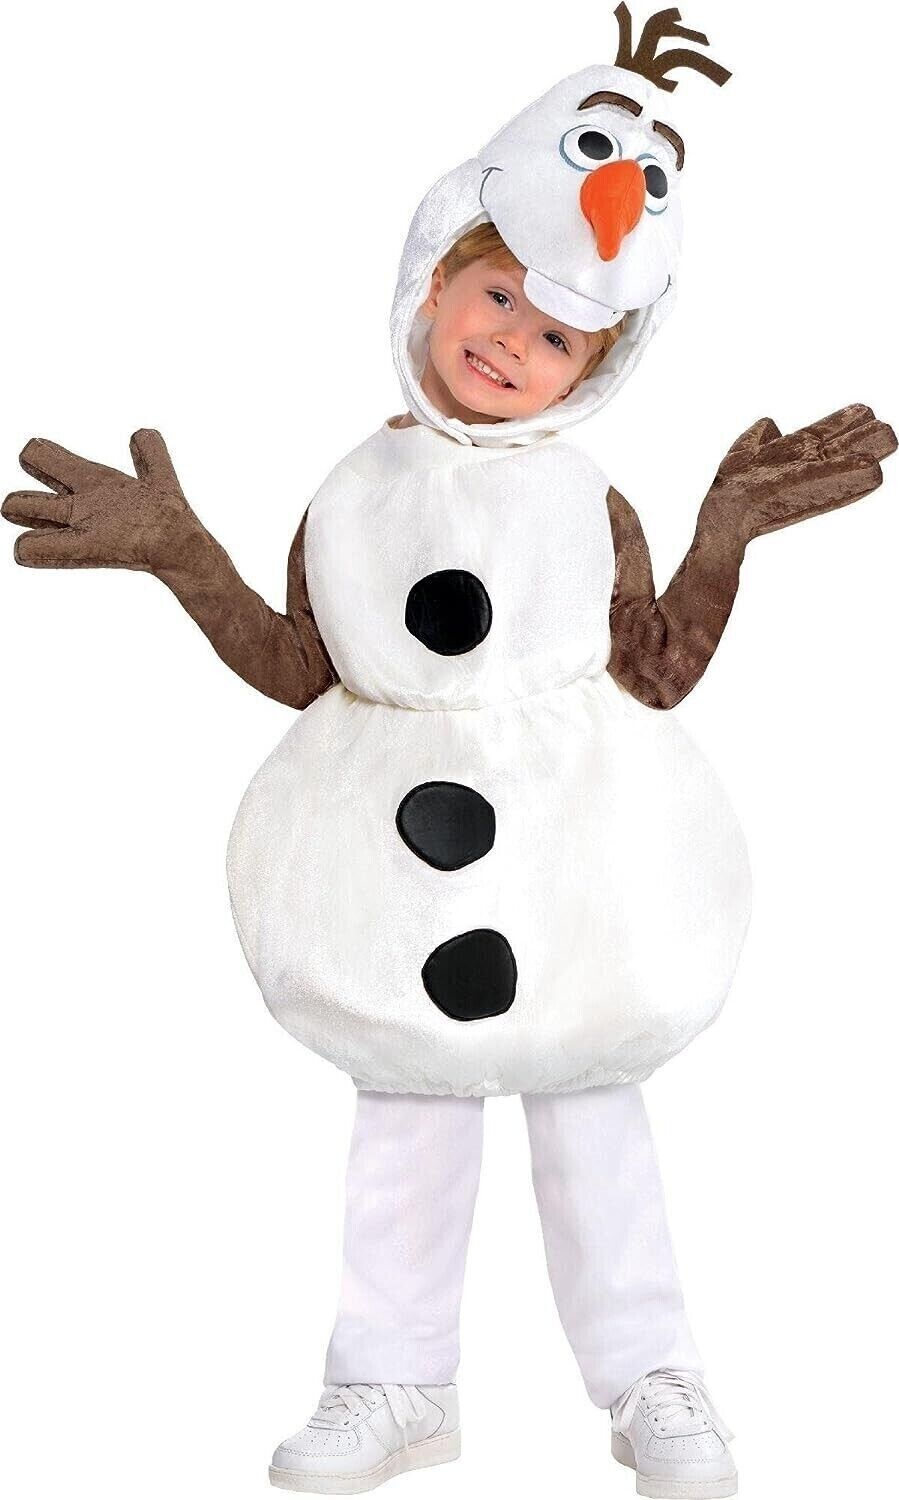 Disney Frozen Olaf Snowman 2-Piece Halloween Costume Child Size Small (4-6) New